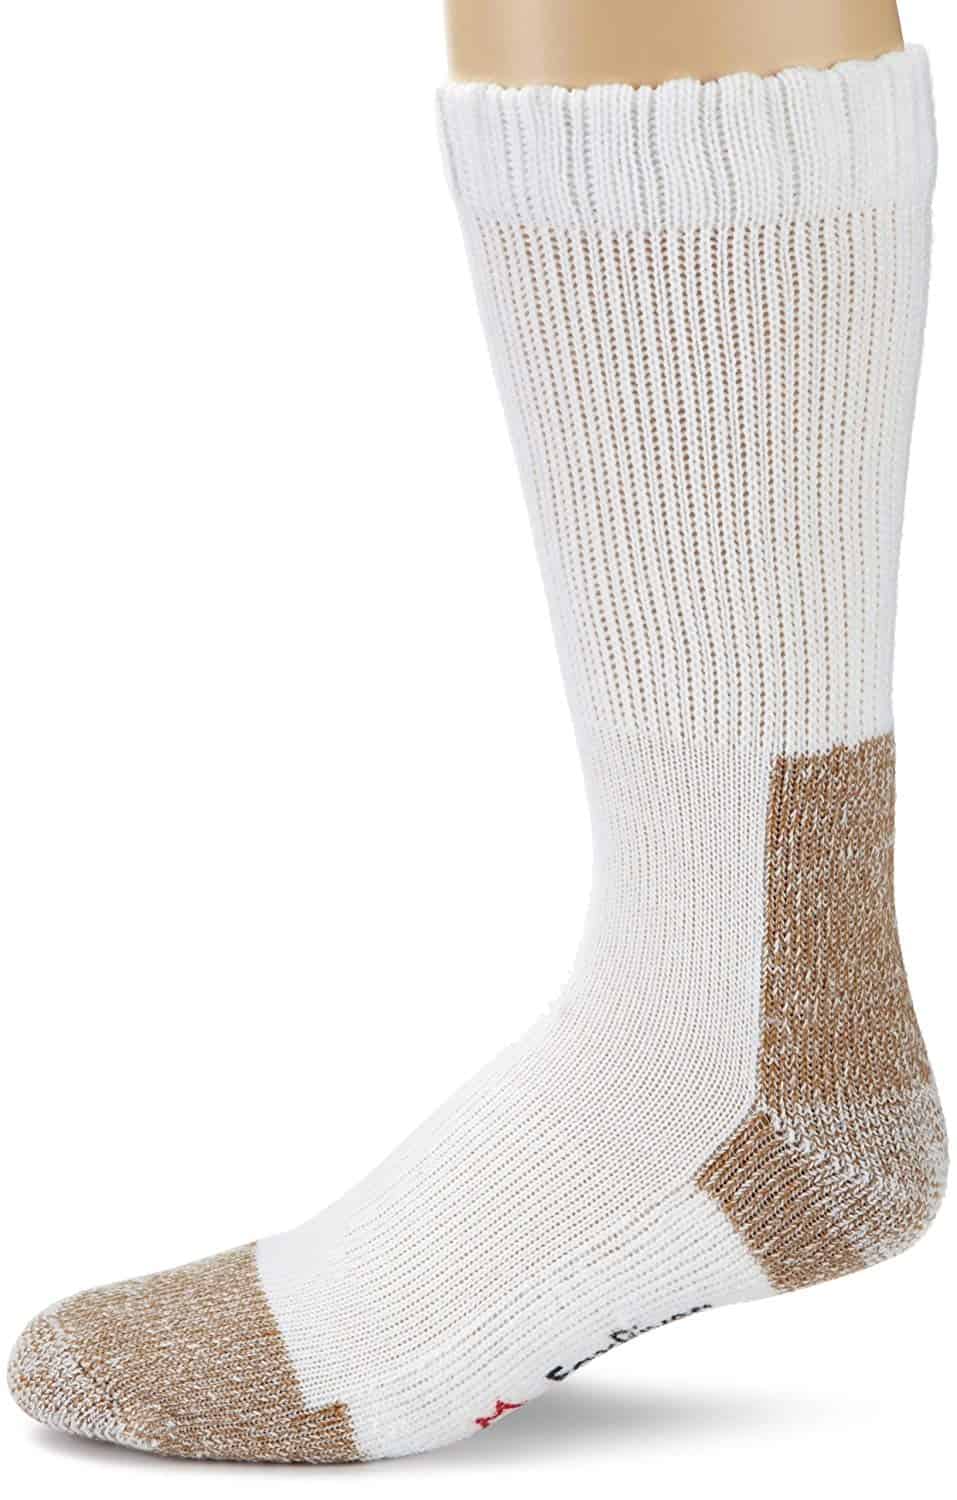 socks for steel toe boots